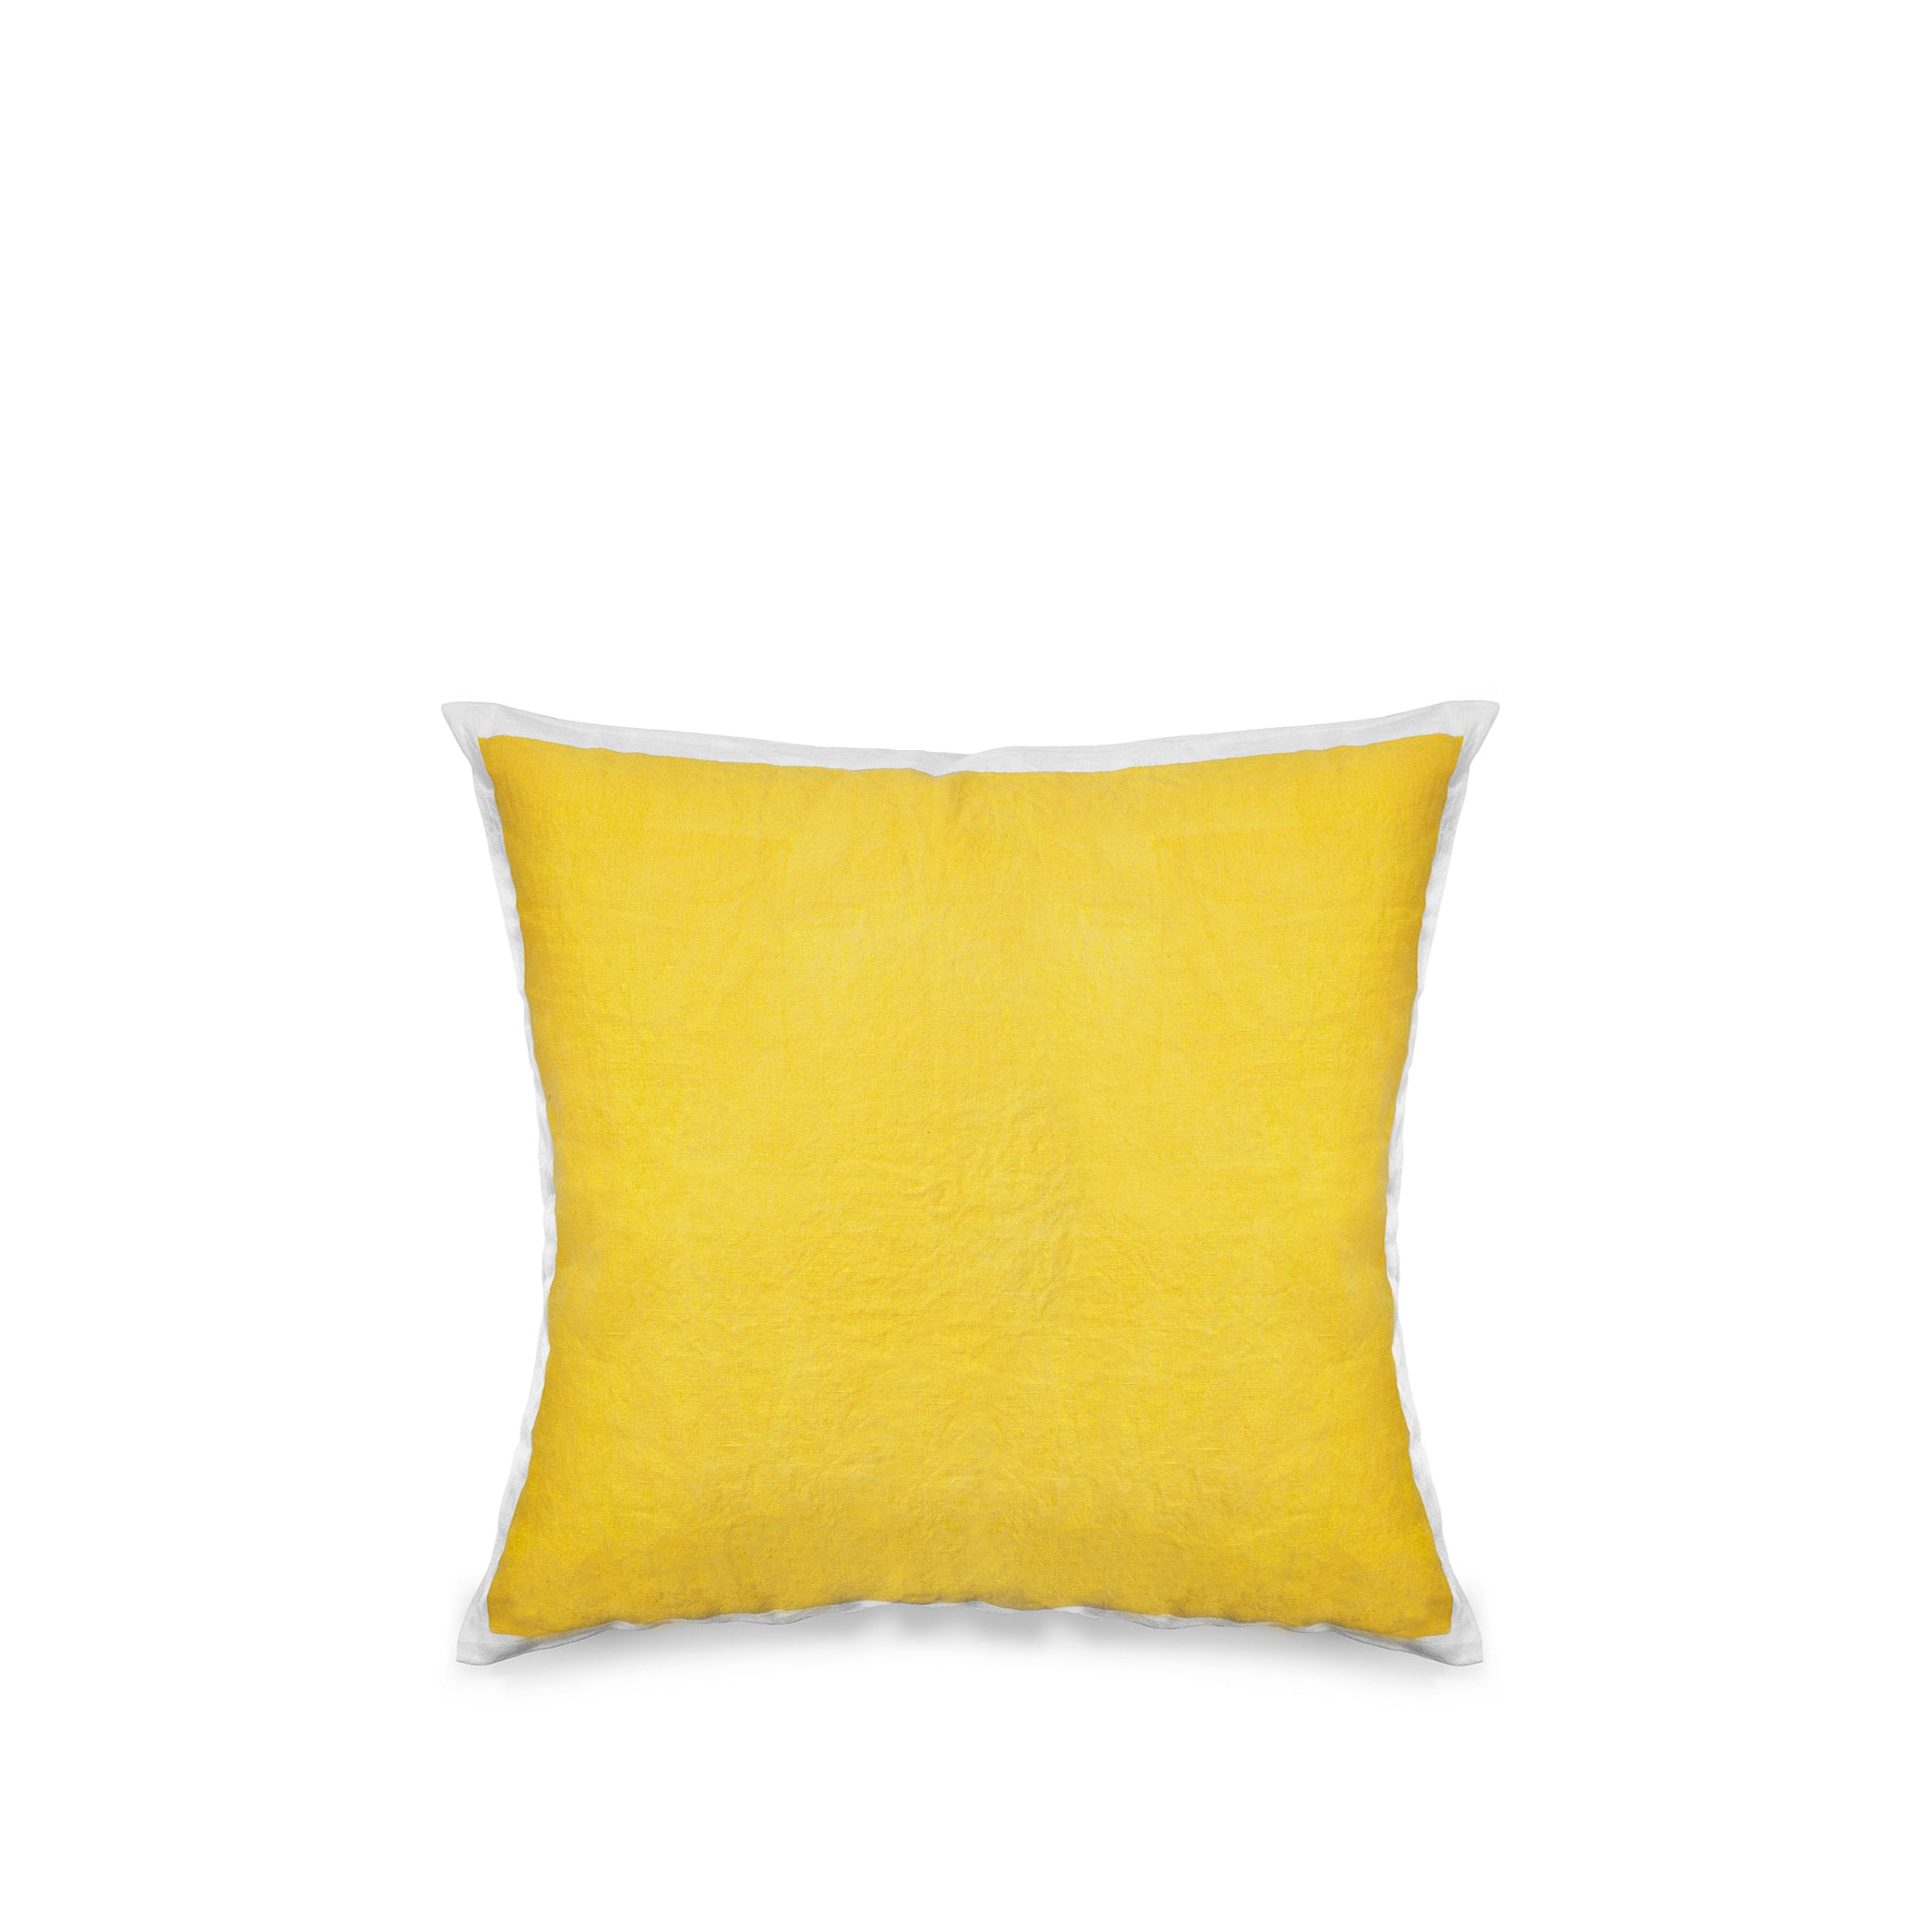 Hand Painted Linen Cushion in Lemon Yellow, 50cm x 50cm